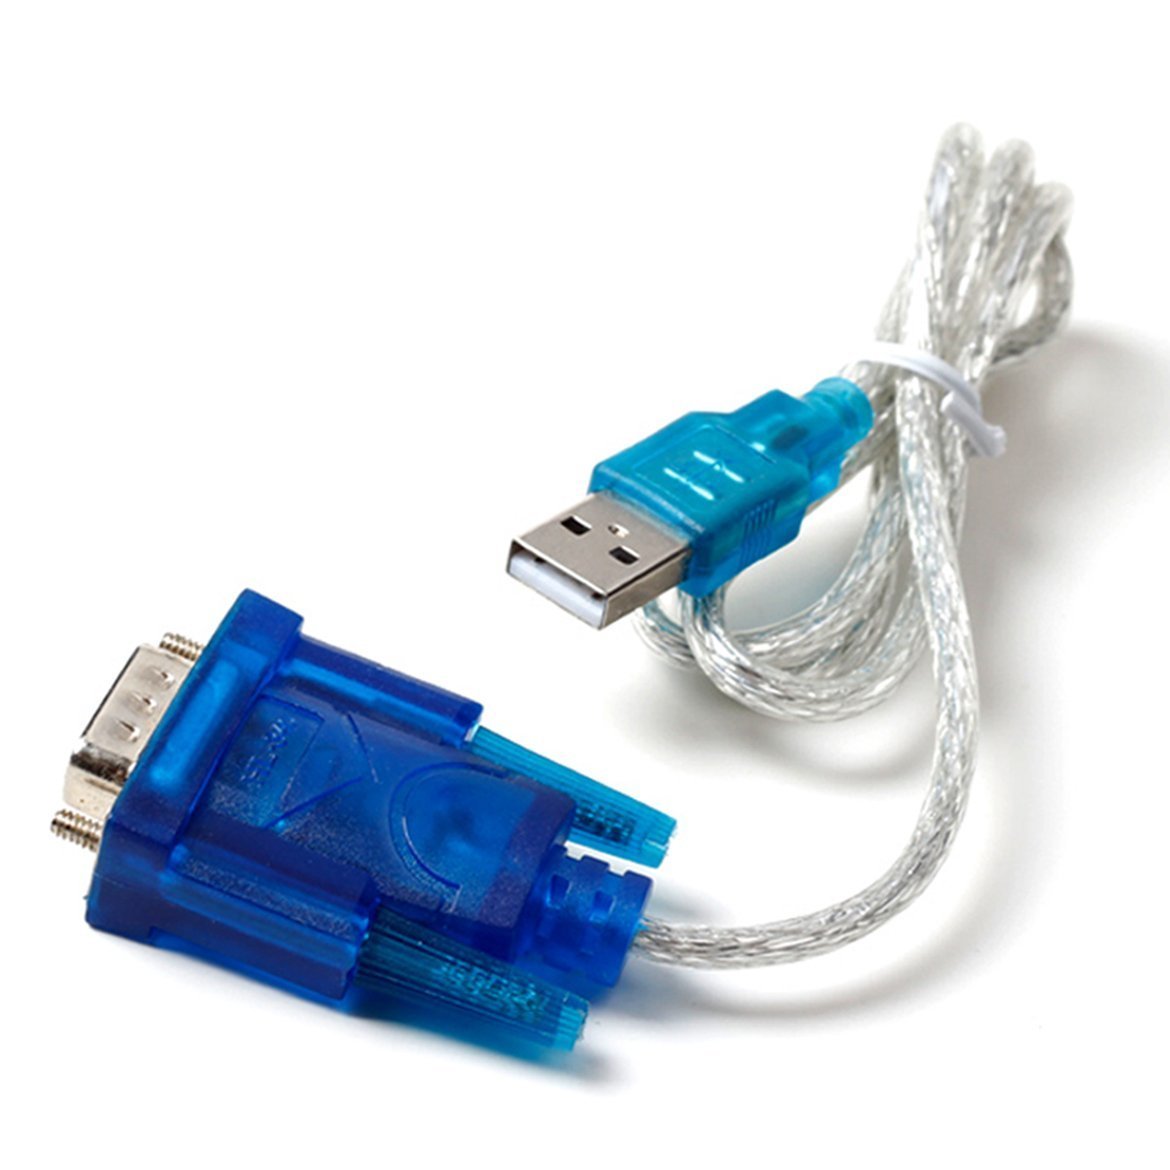 Aihasd HL-340 USB to RS232